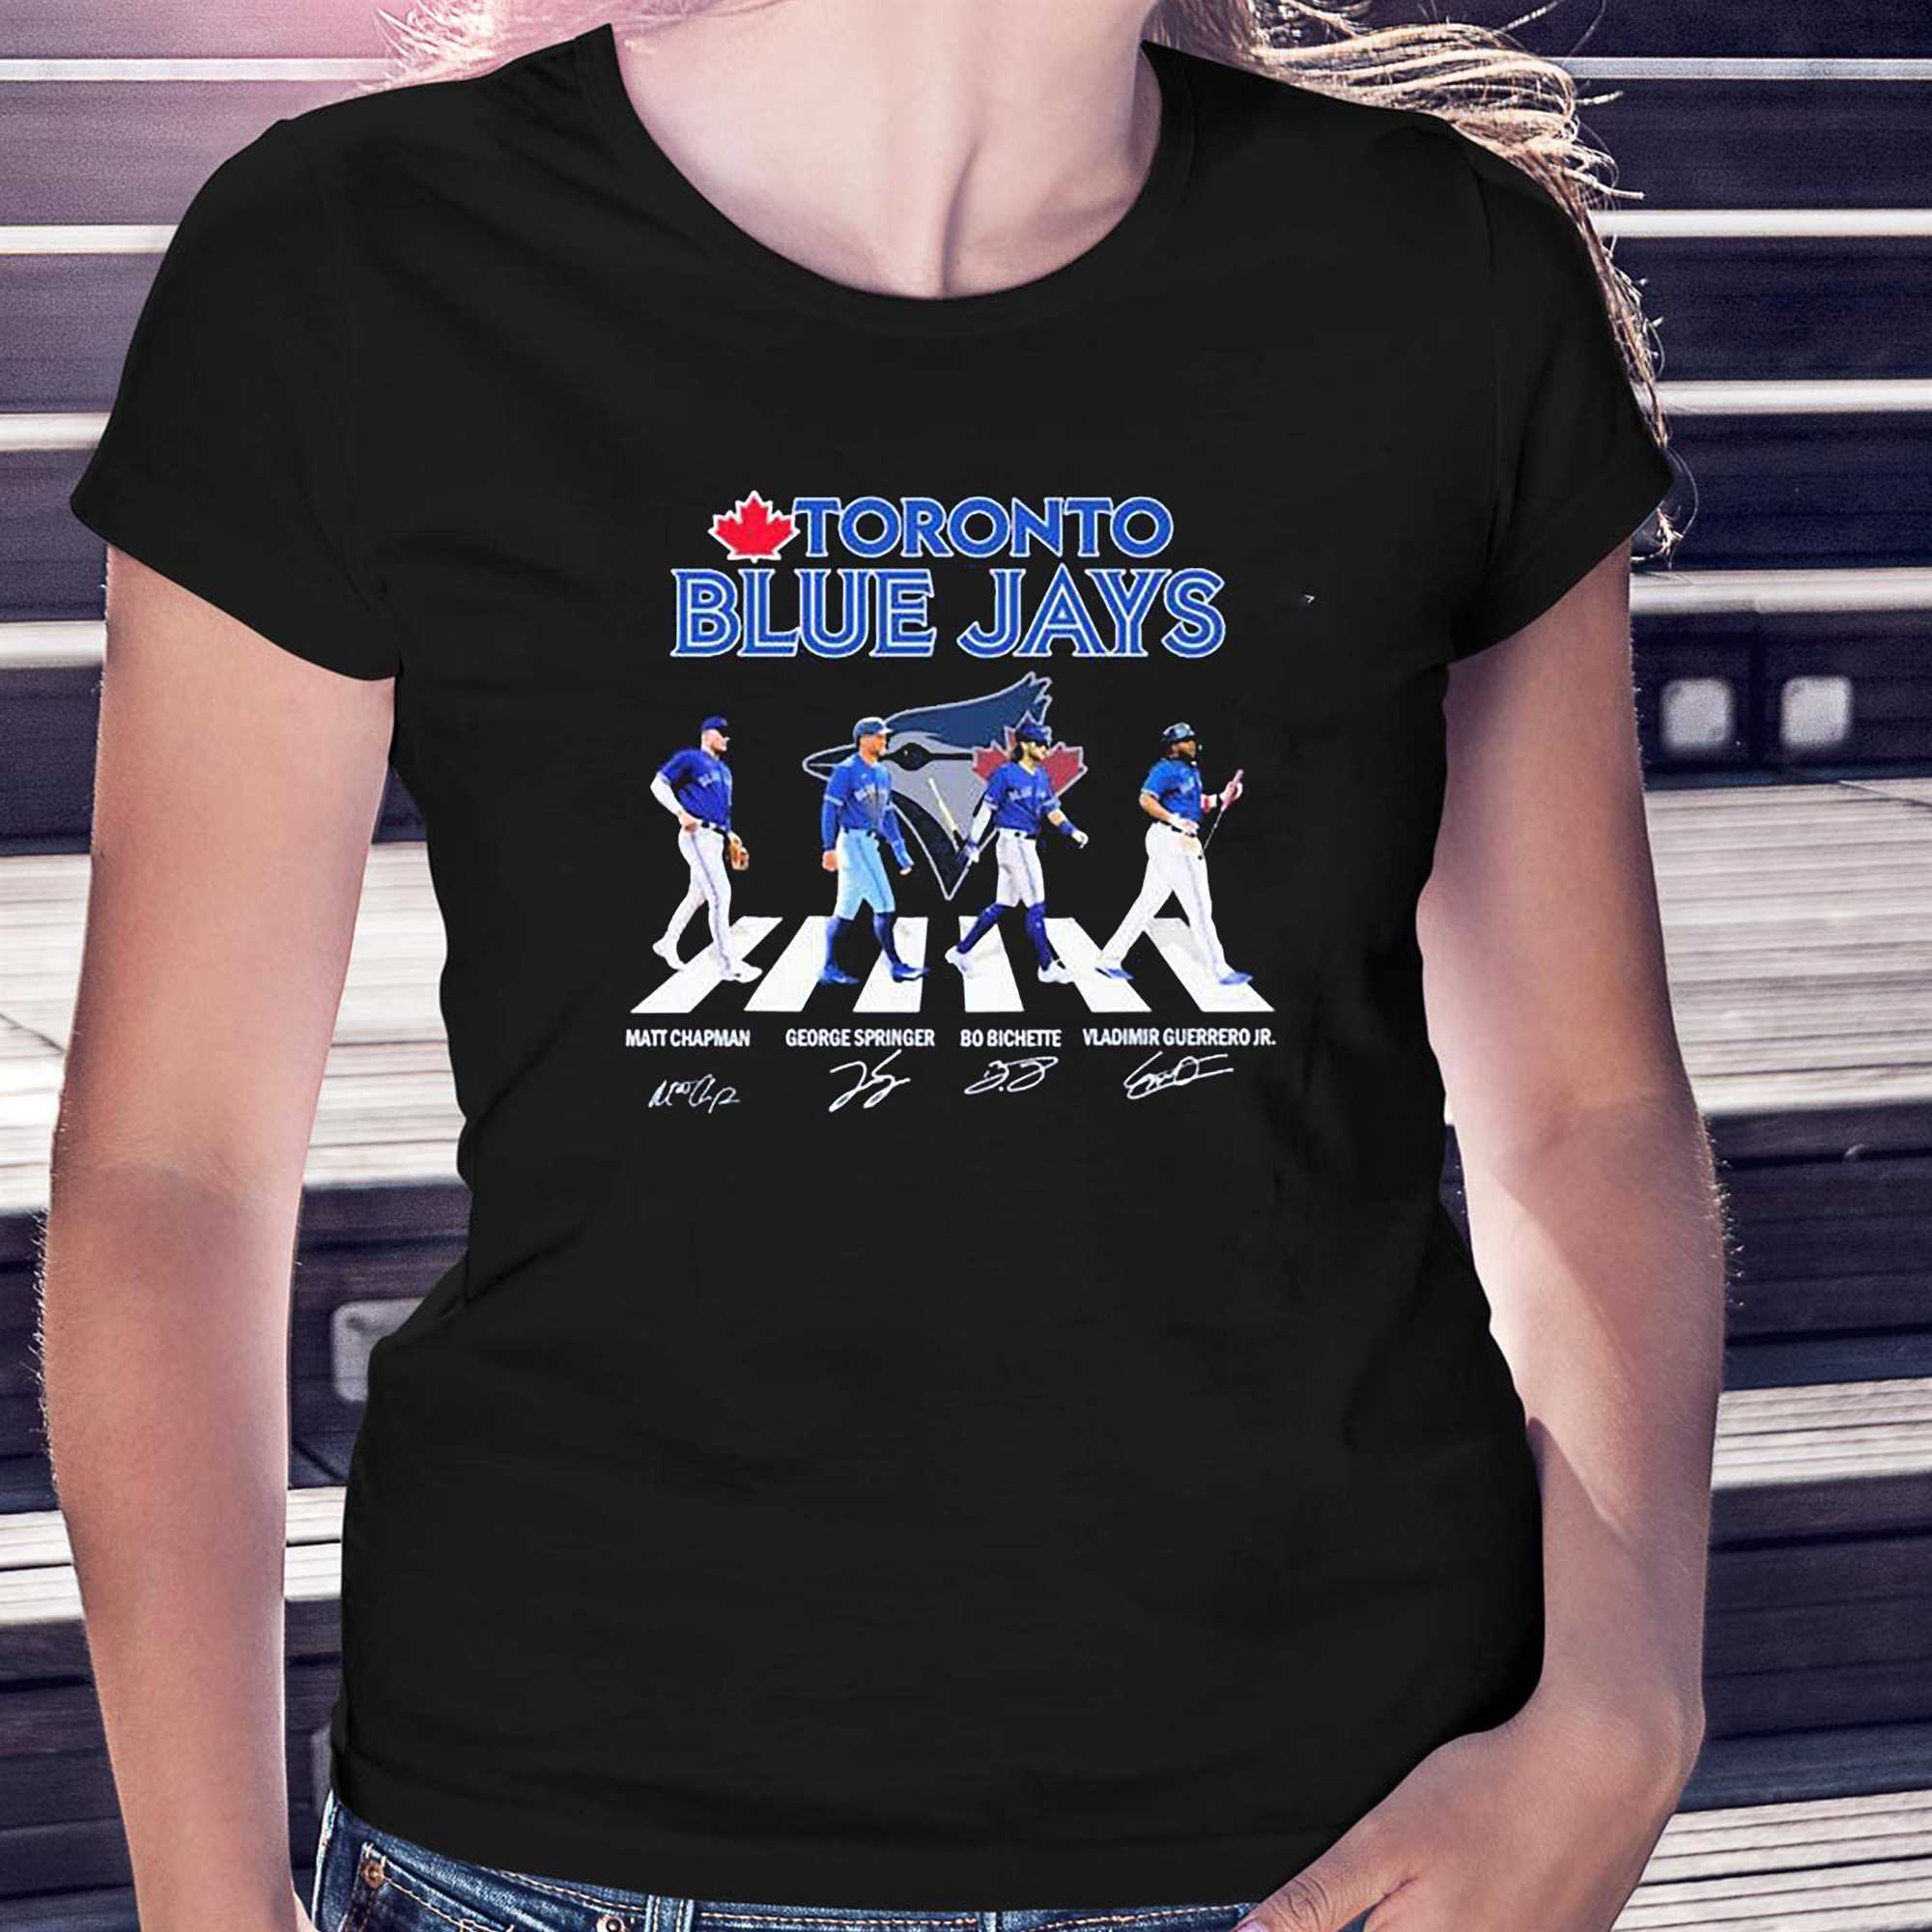 Toronto Blue Jays Merchandise, Blue Jays Apparel, Jerseys & Gear